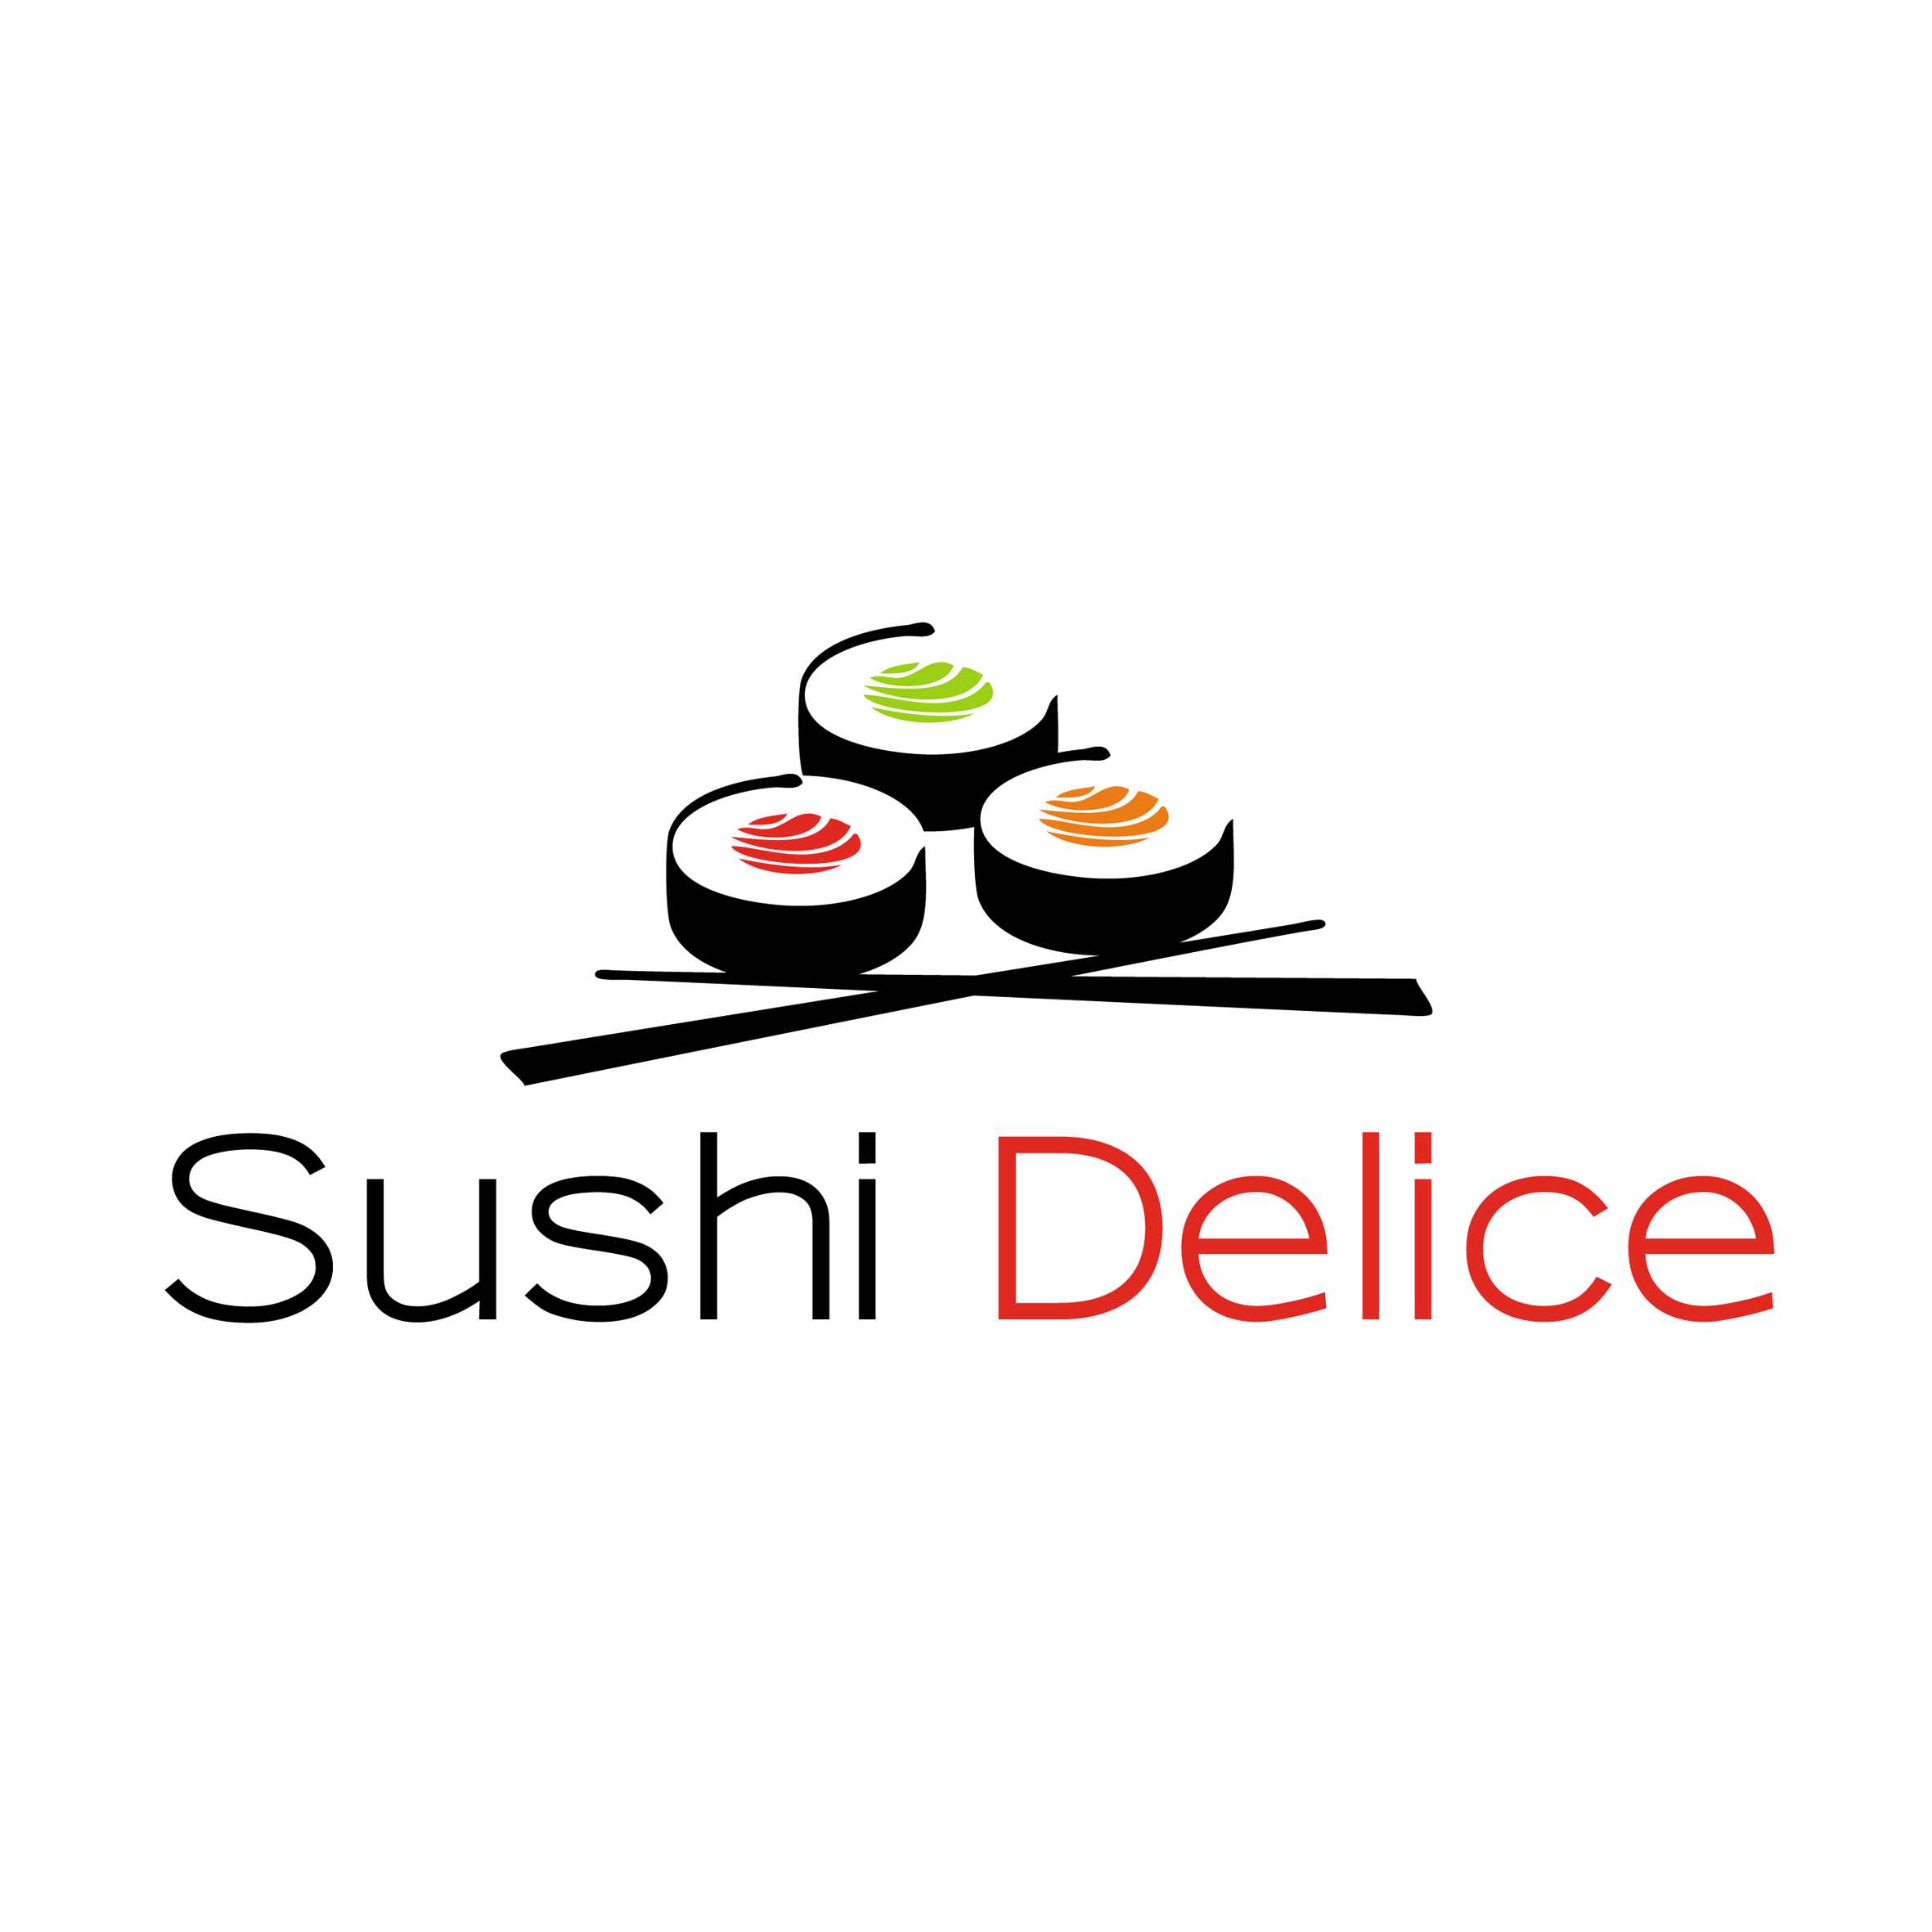 Sushi delice